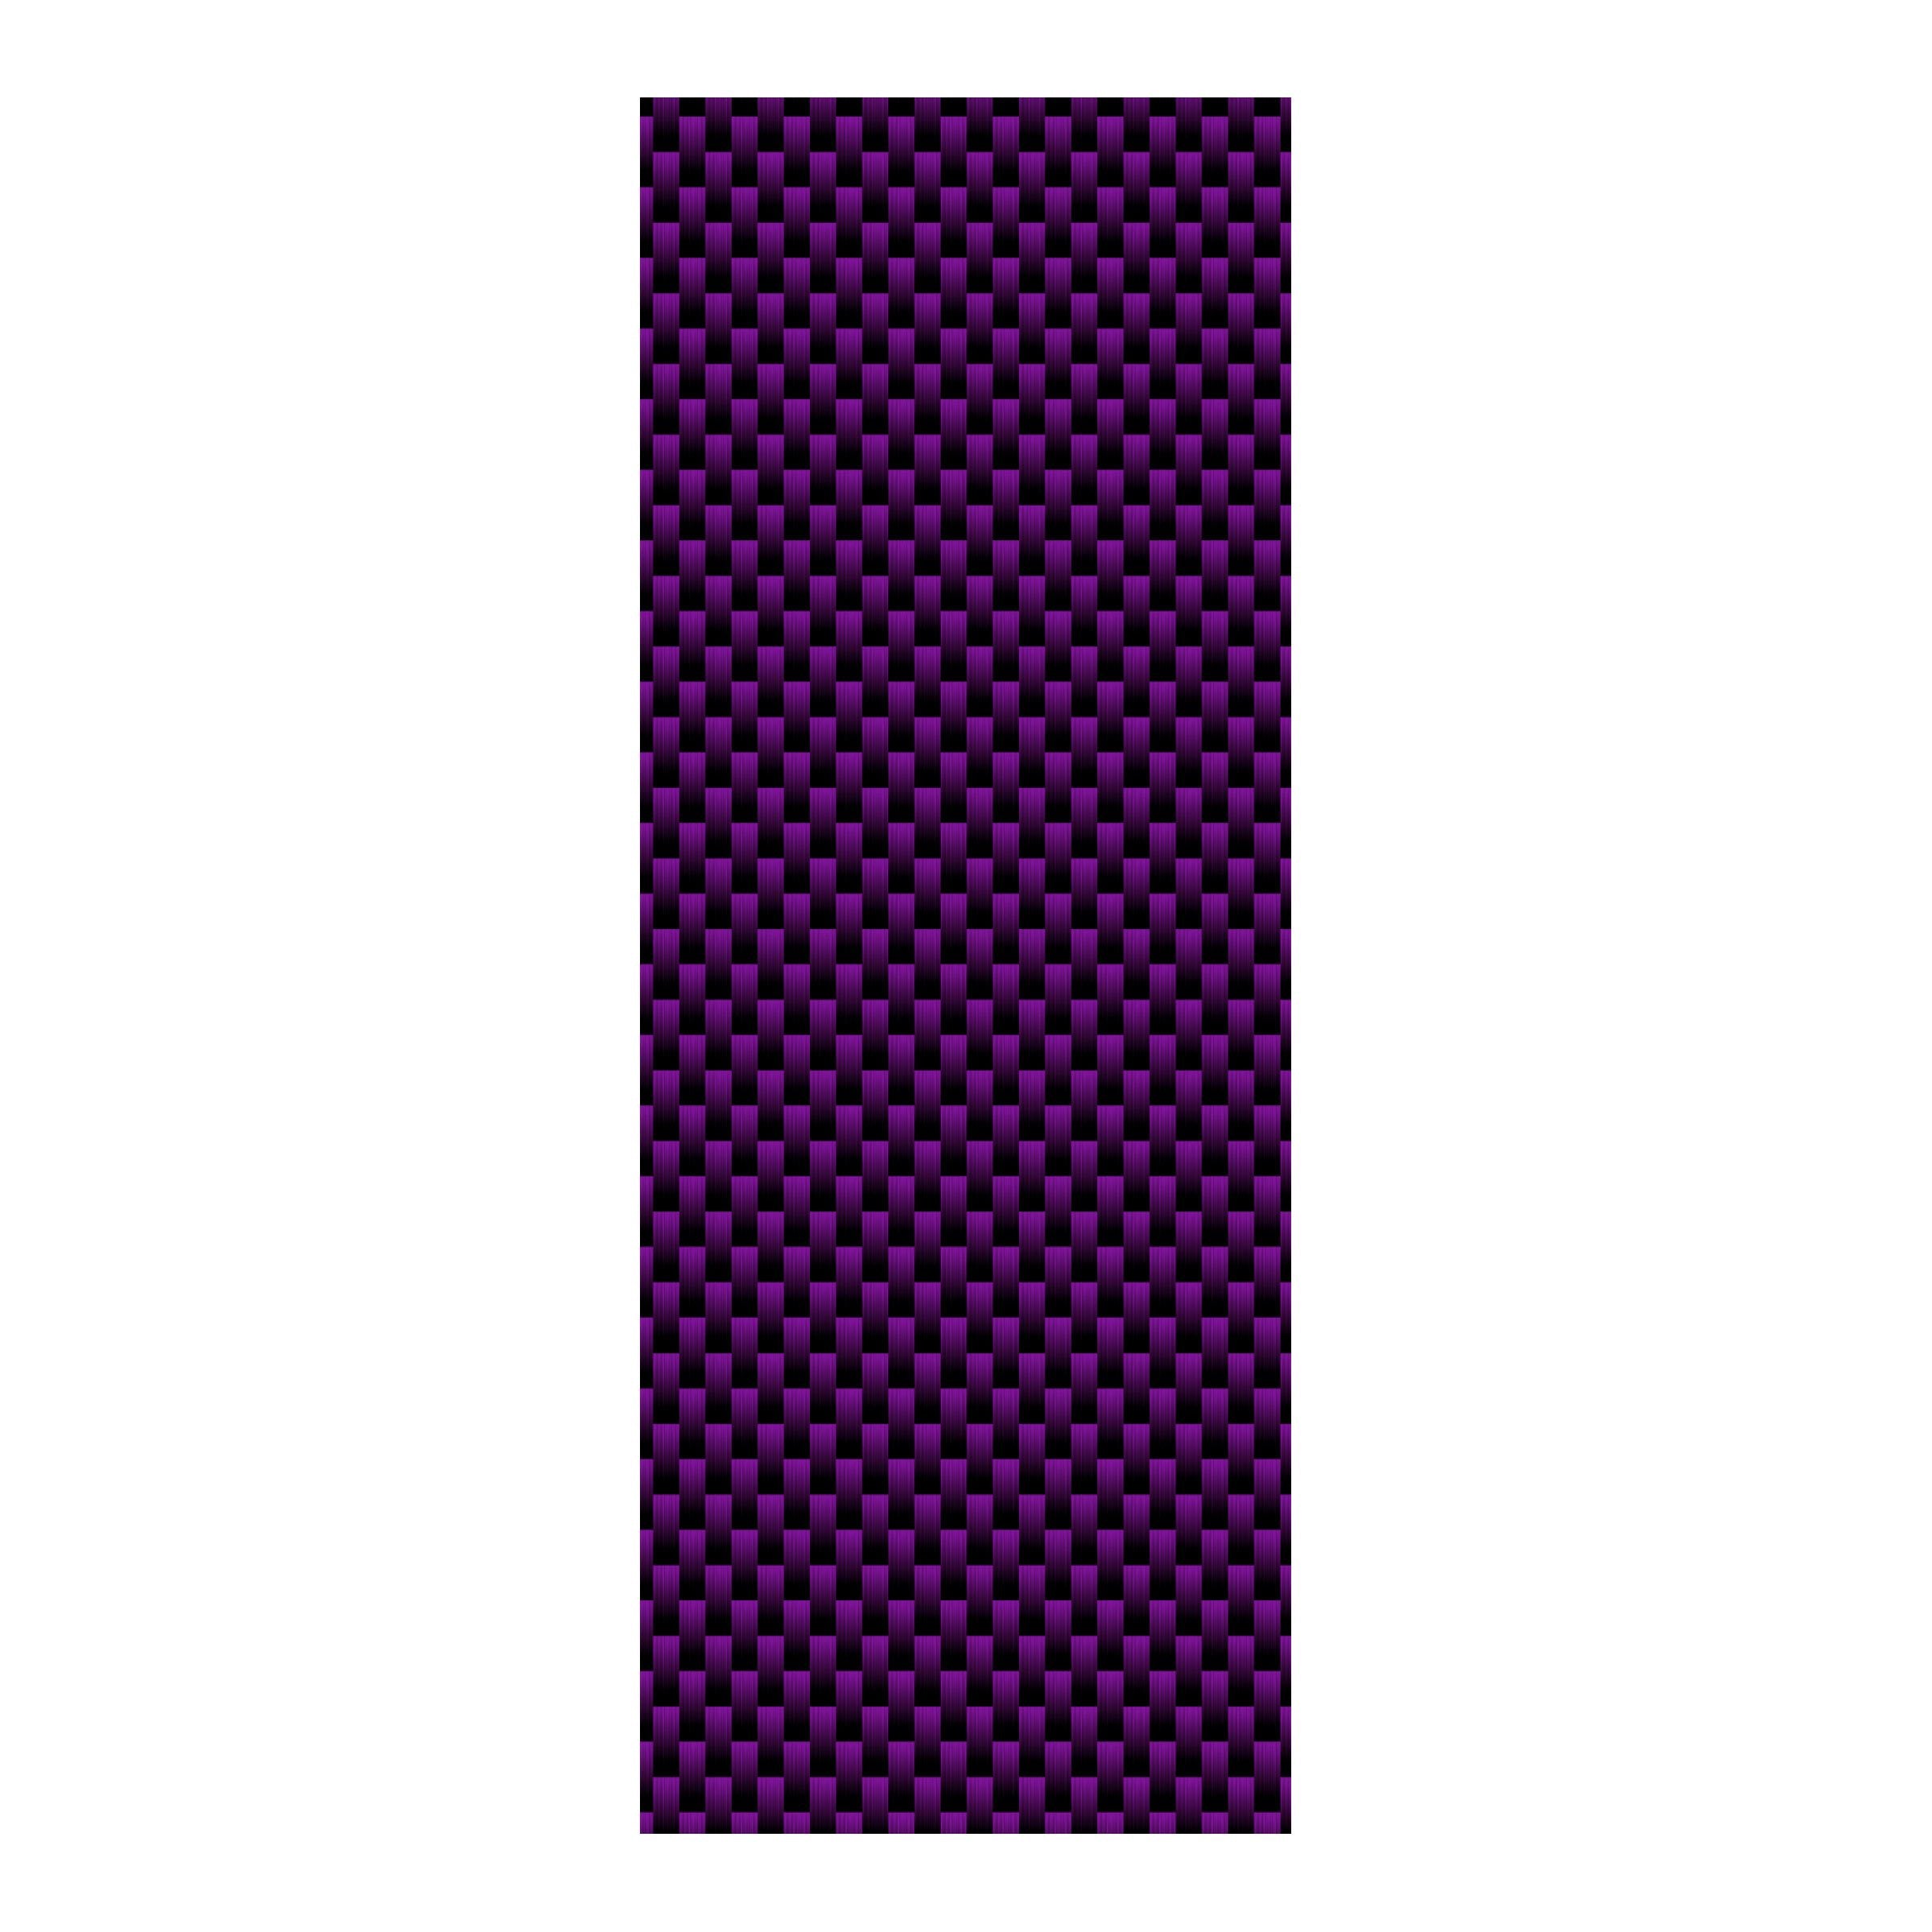 #design_carbon fiber (purple)